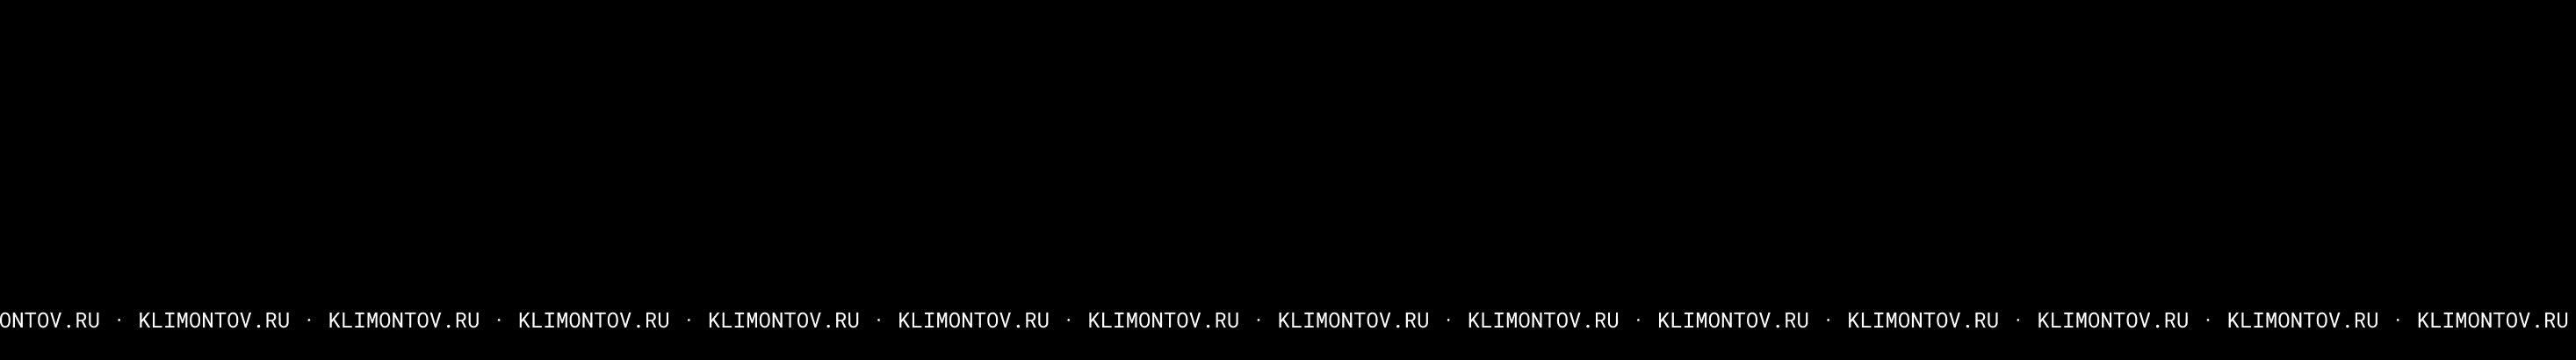 Bannière de profil de Денис Климонтов